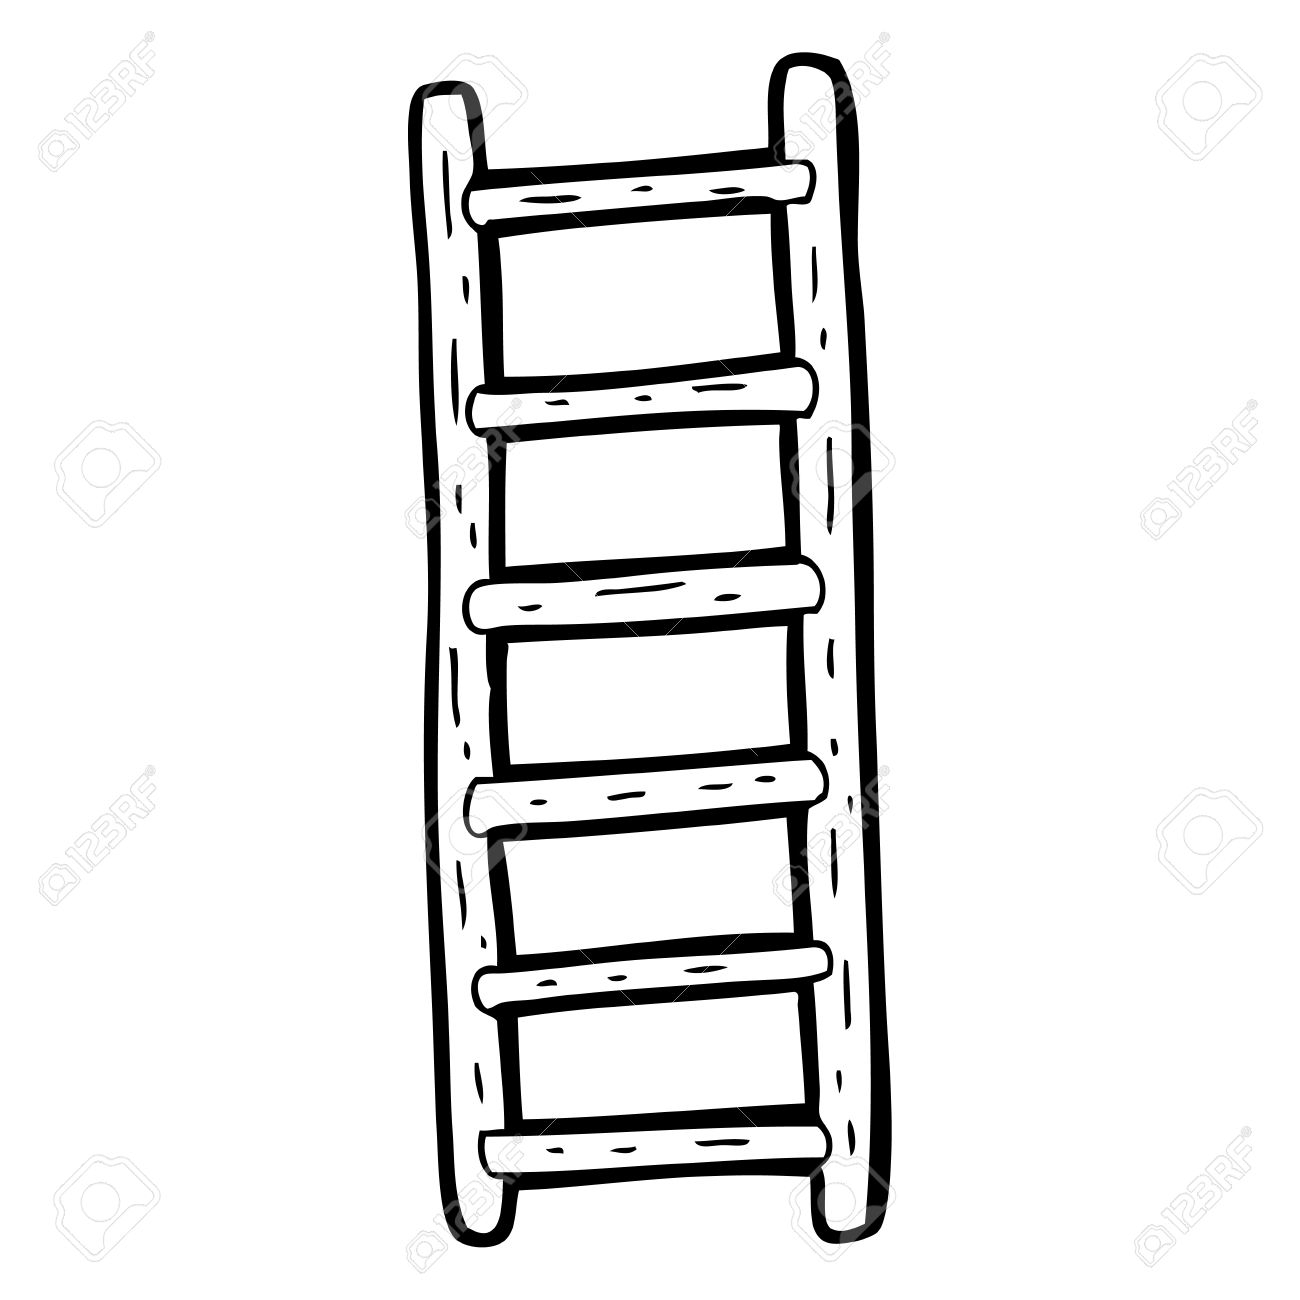 Ladder clipart ladder.